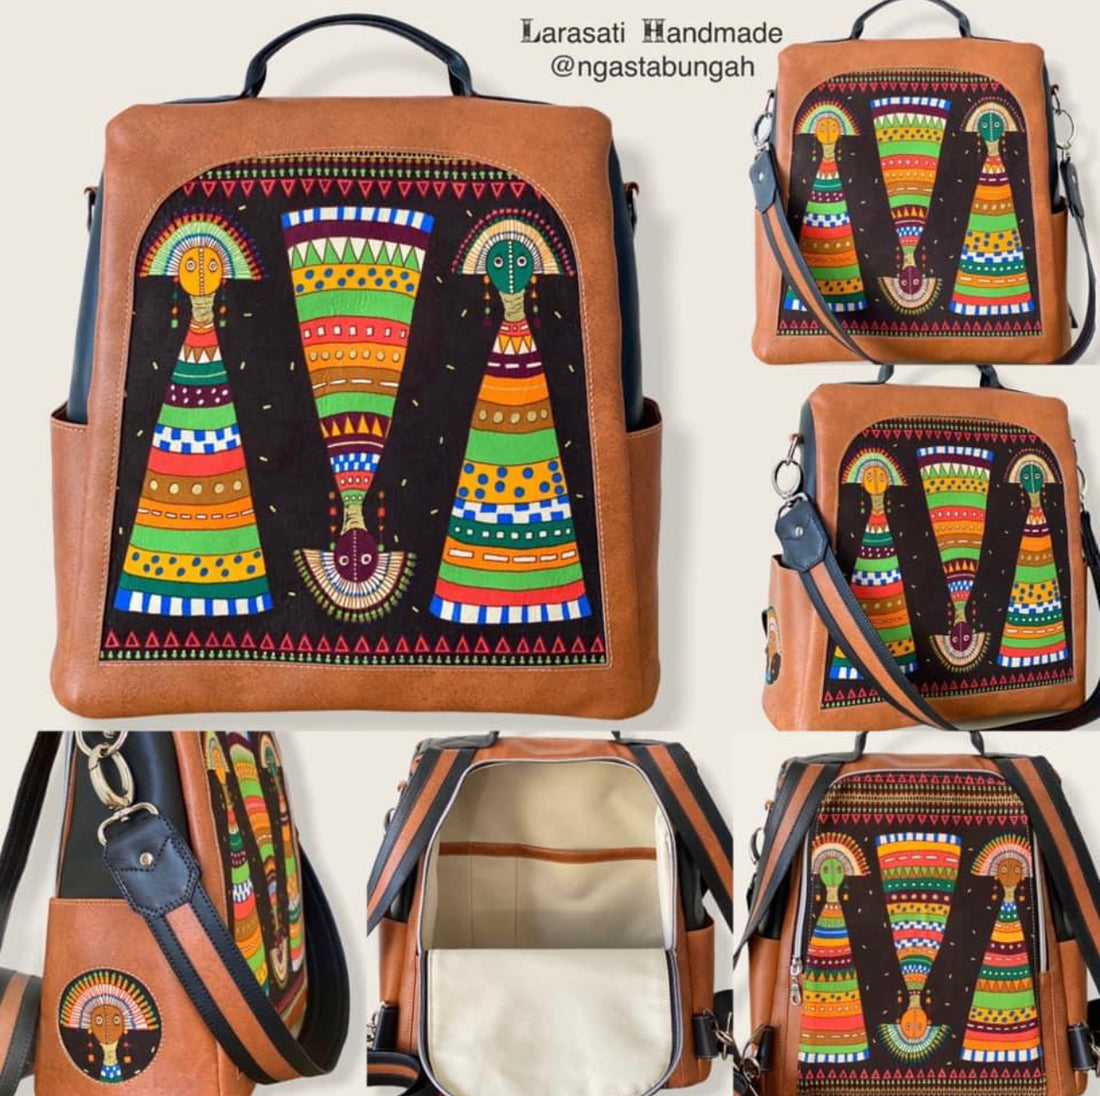 Ladies Backpack Large Capacity Bag Anti-theft Backpack Travel Bag